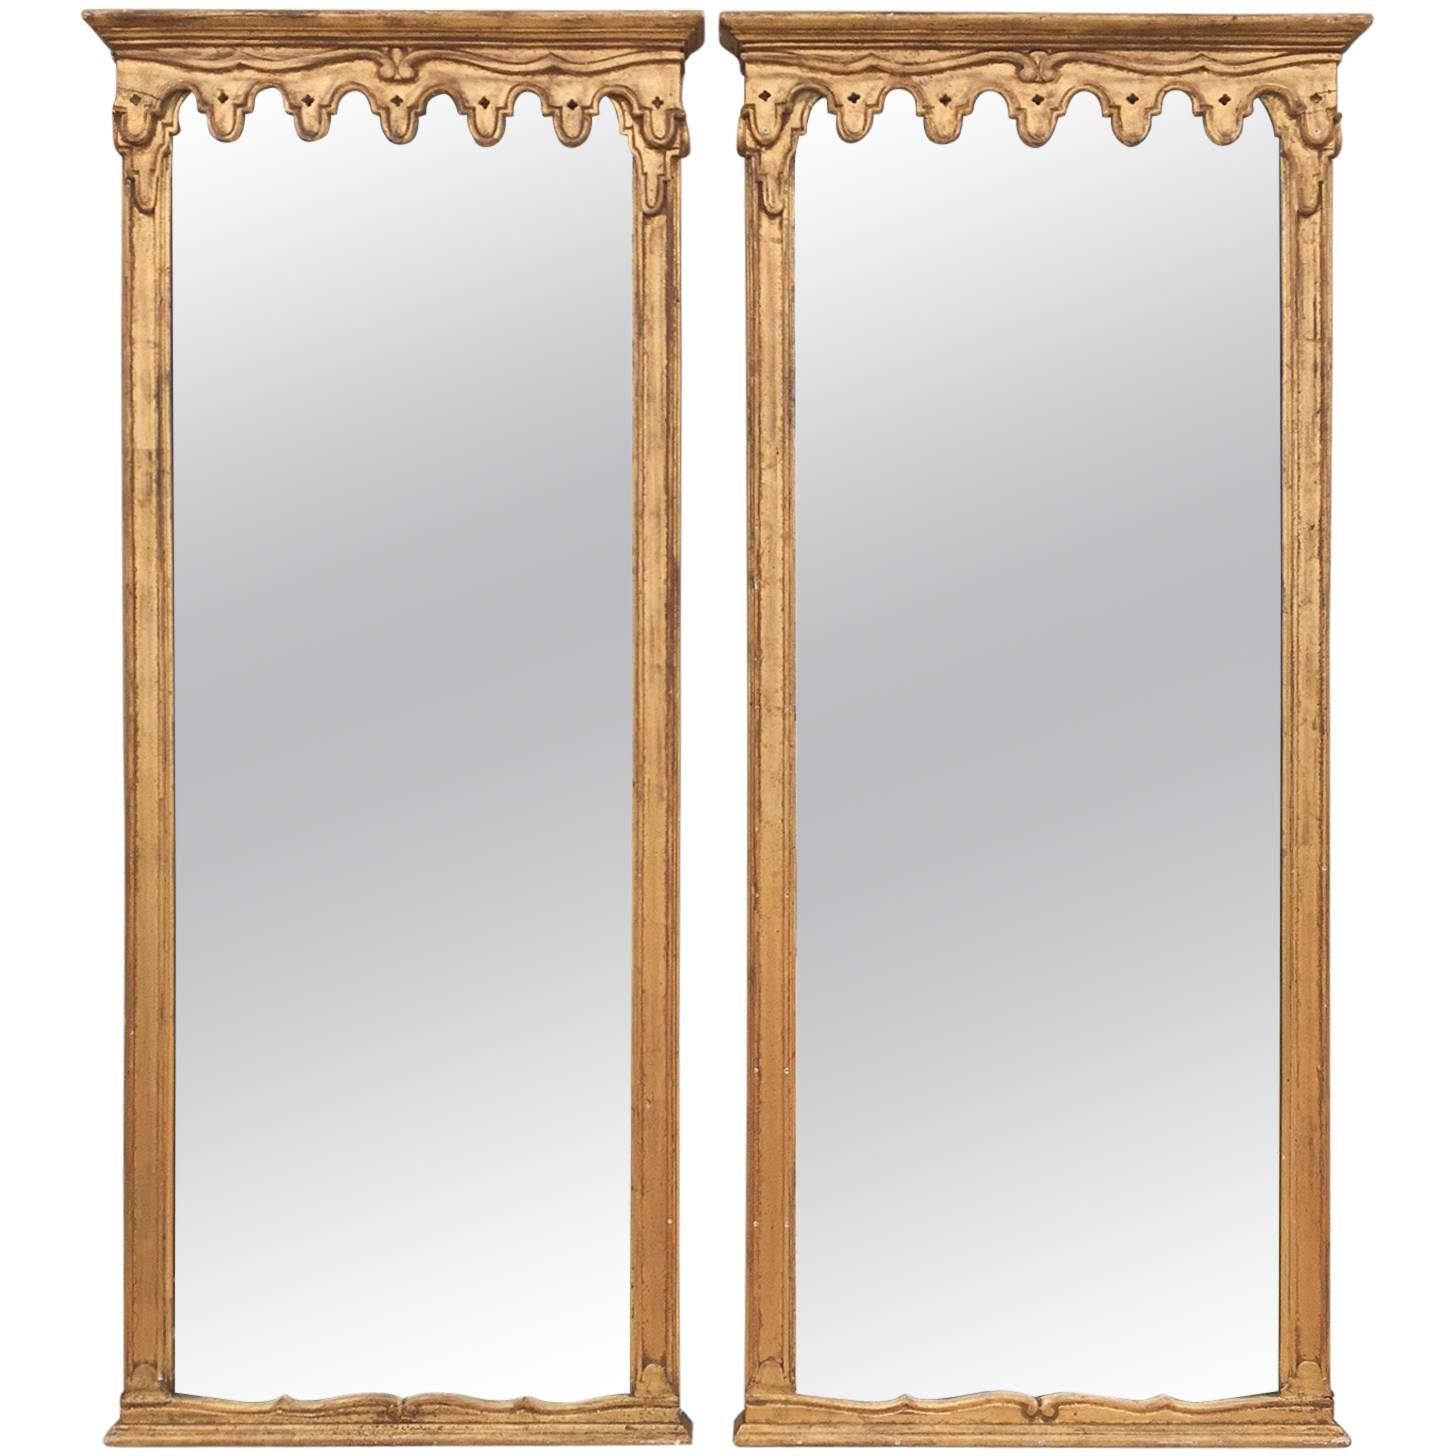 1950s Italian Gilded Florentine Oblong Mirrors, Pair